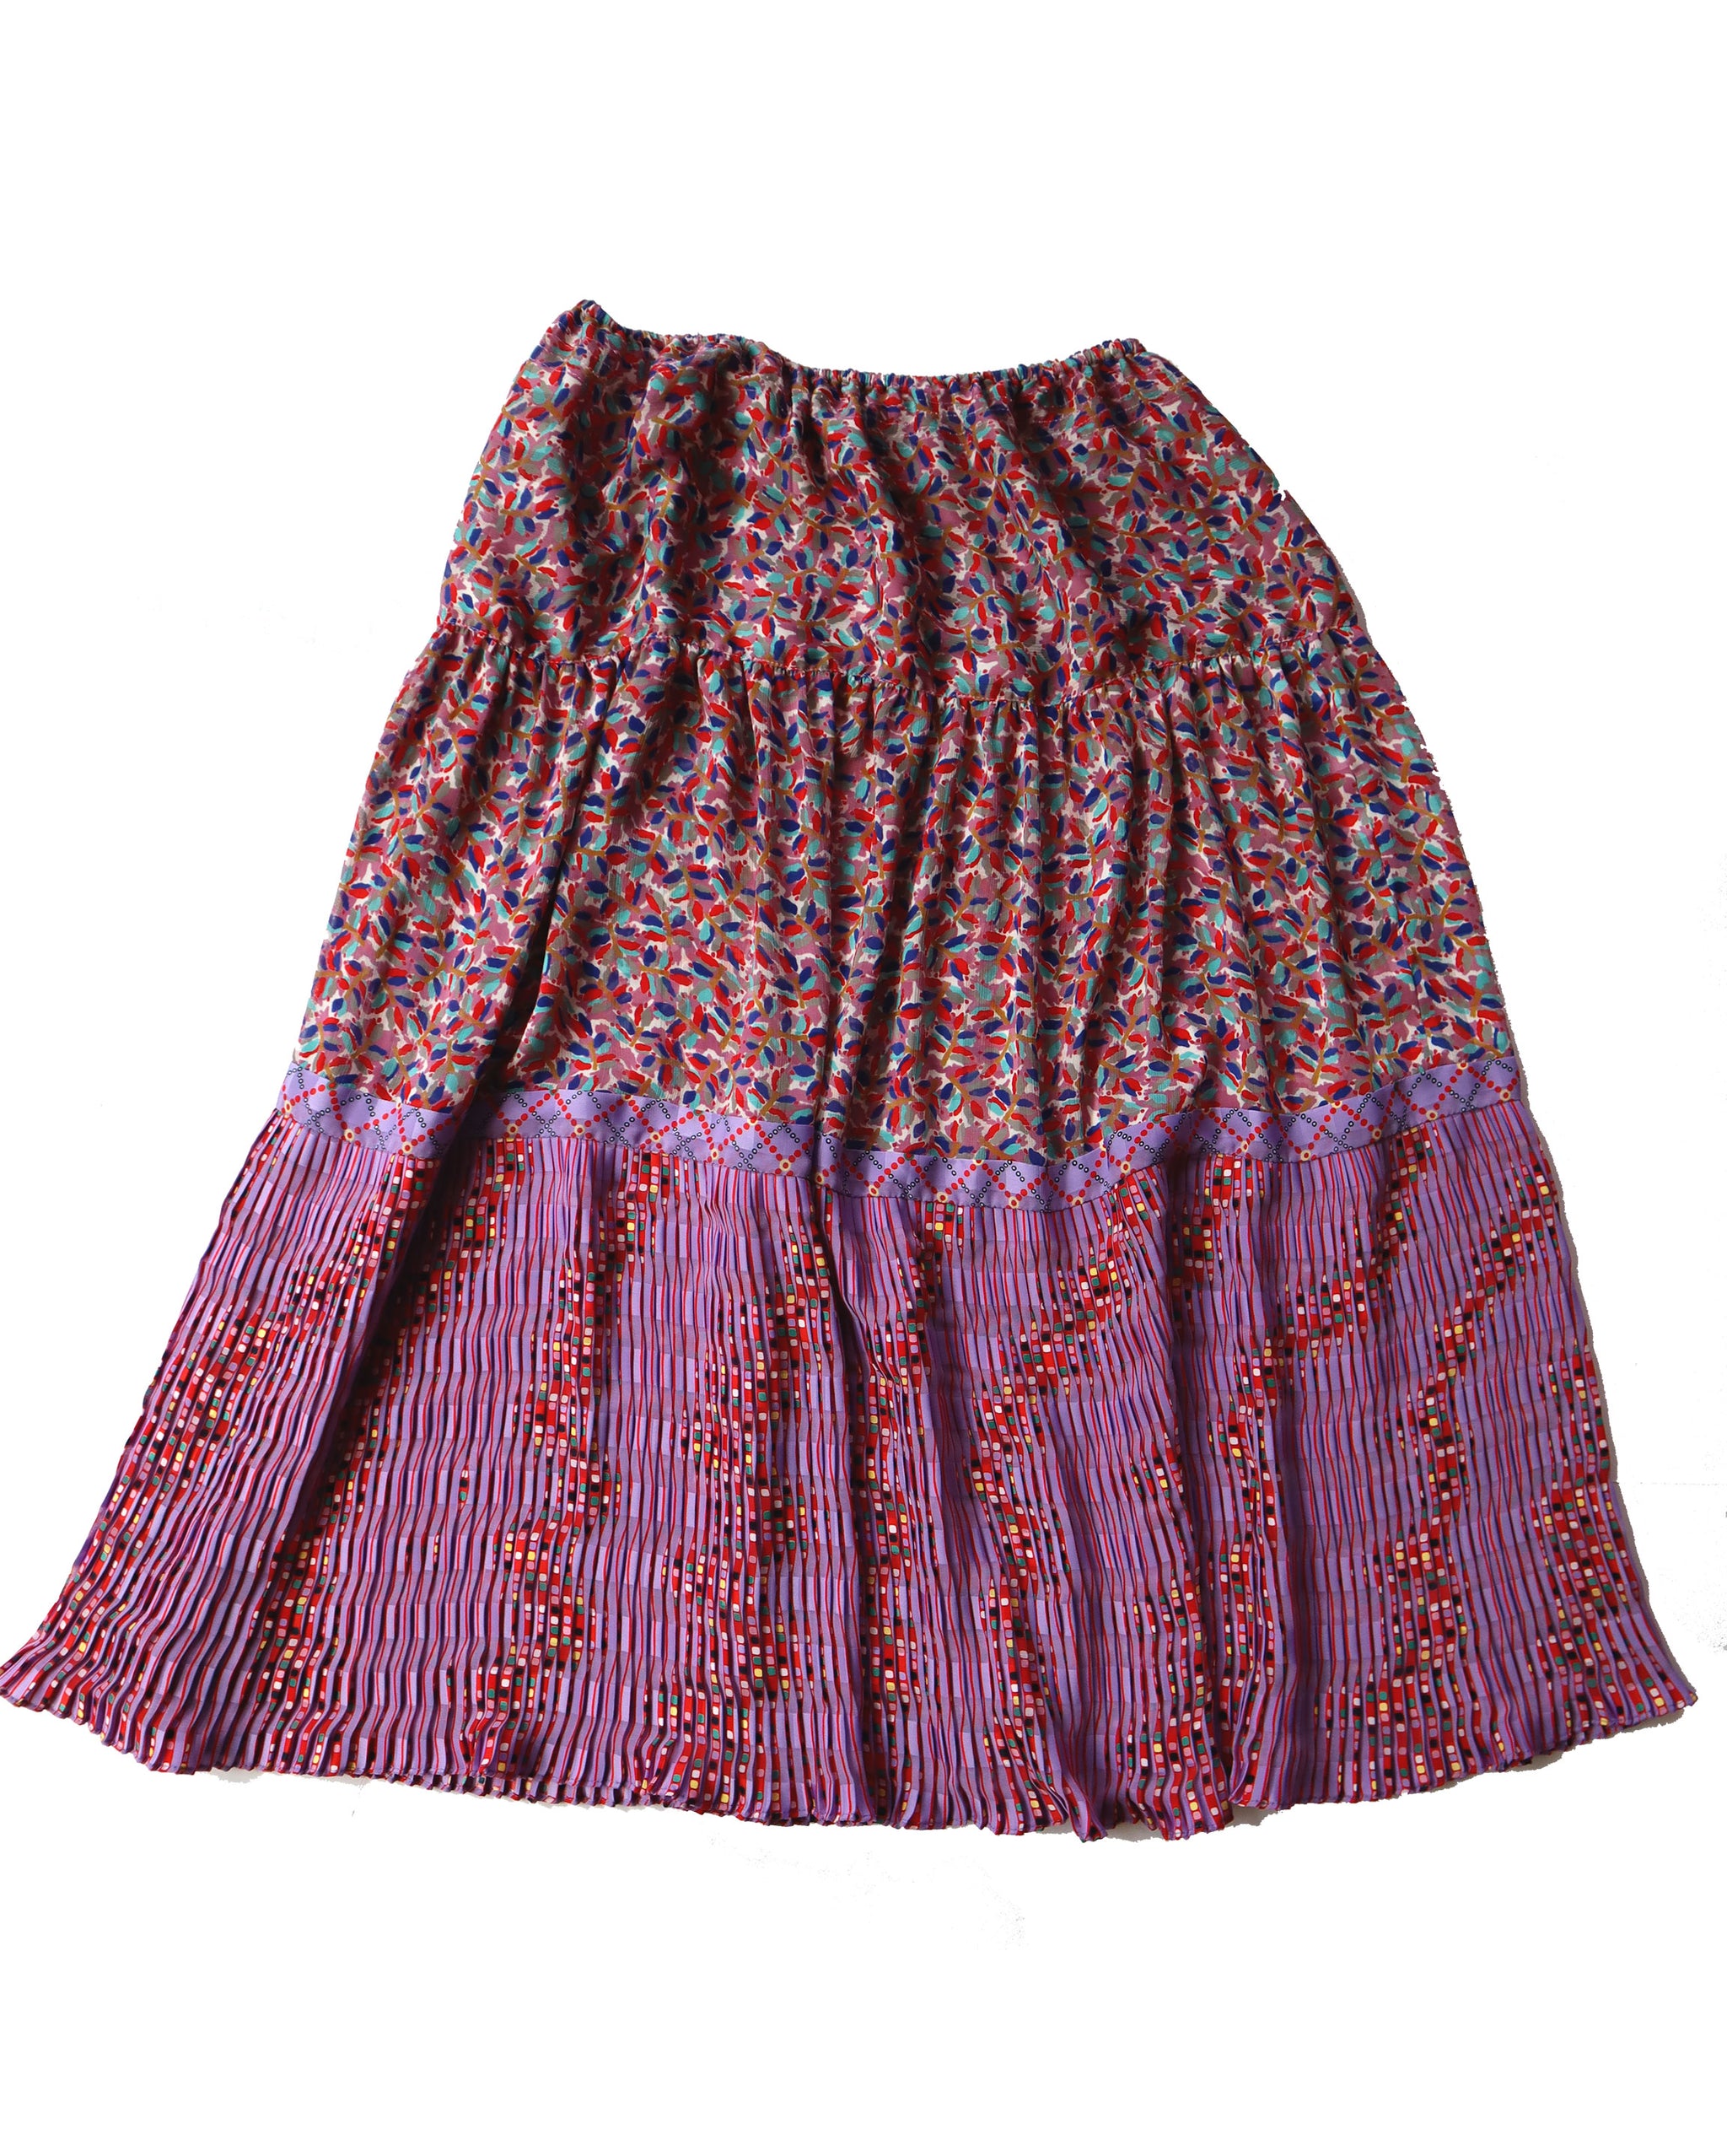 Vintage 90s Pleated & Tiered Bright Printed Skirt